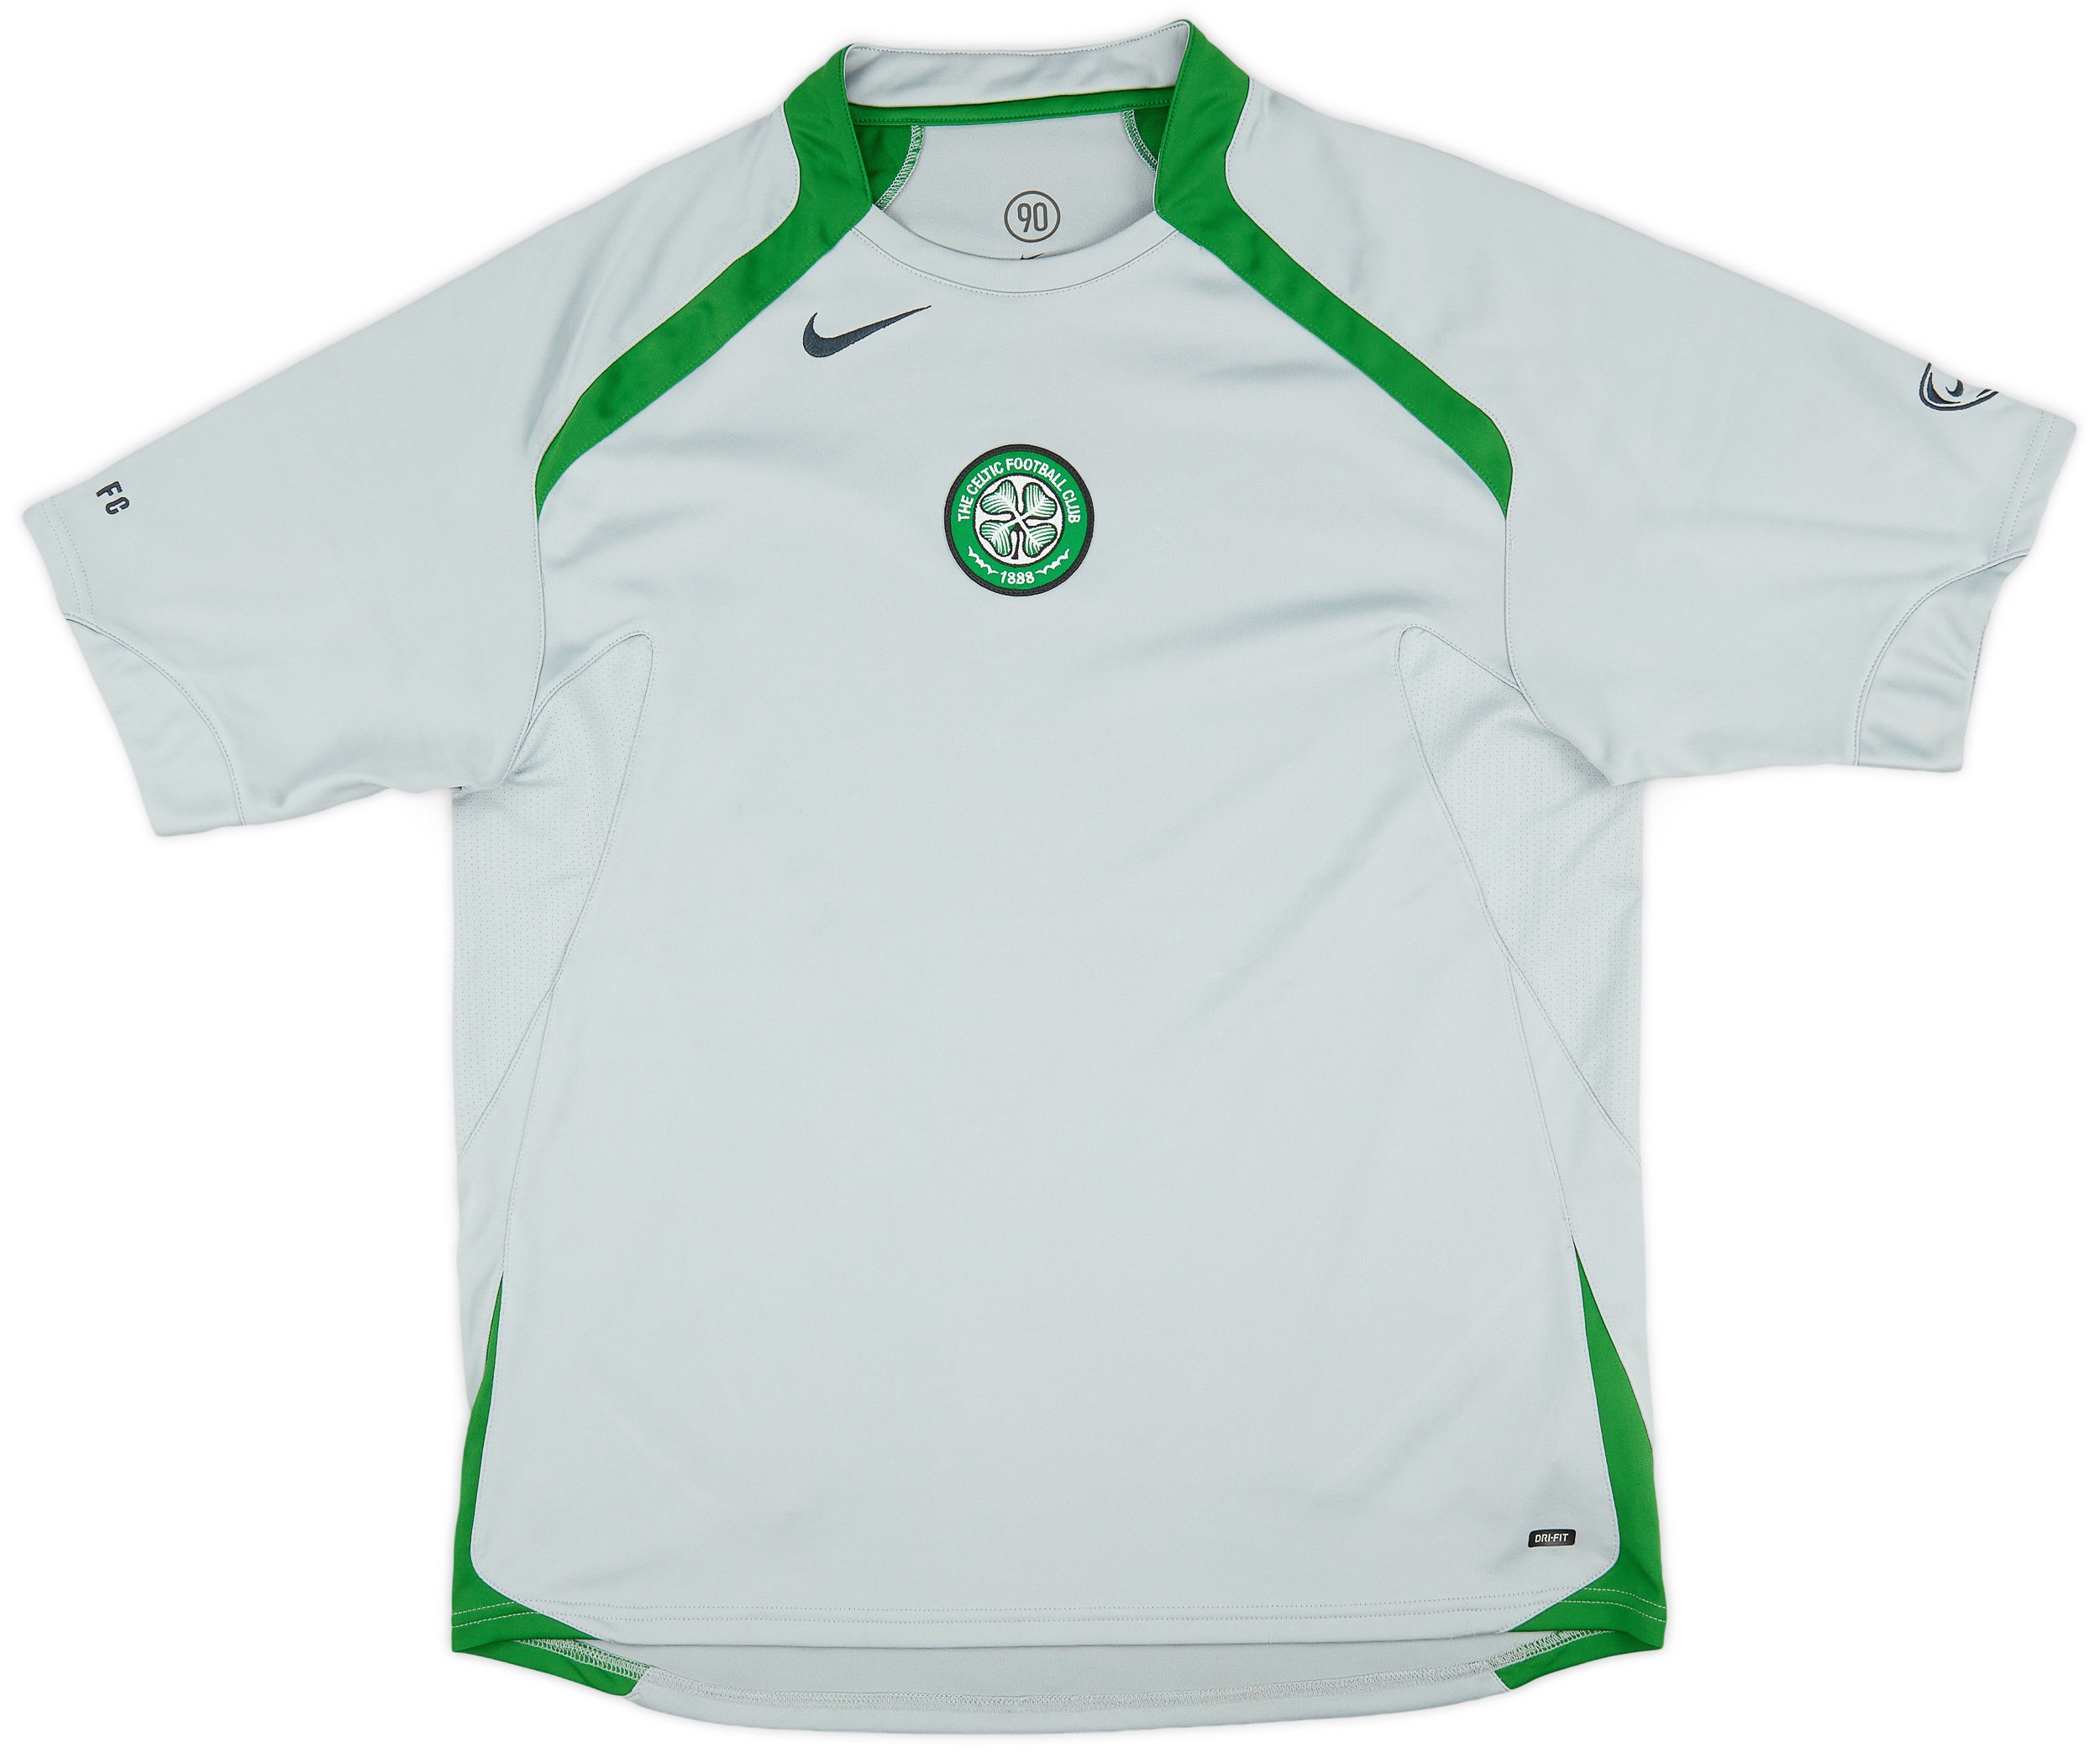 Celtic Away football shirt 2005 - 2006. Sponsored by Carling